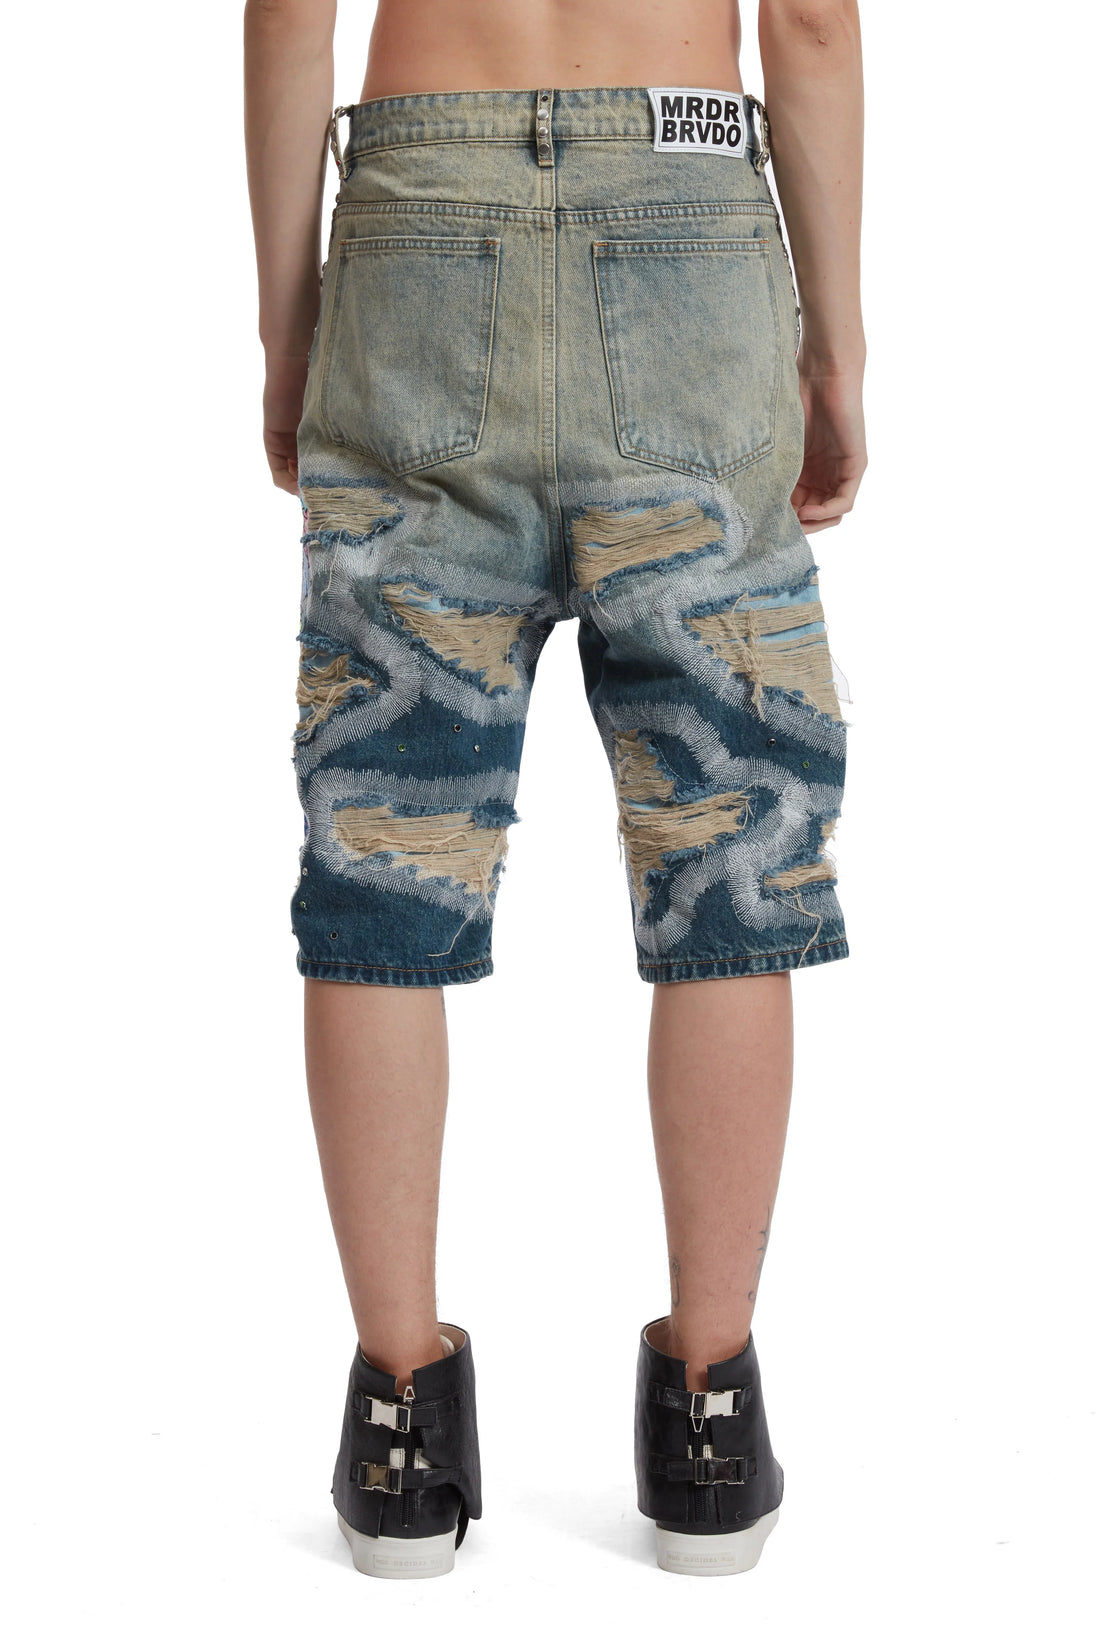 WHO DECIDES WAR Chrome Stud Embroidered Denim Shorts Blue - MAISONDEFASHION.COM